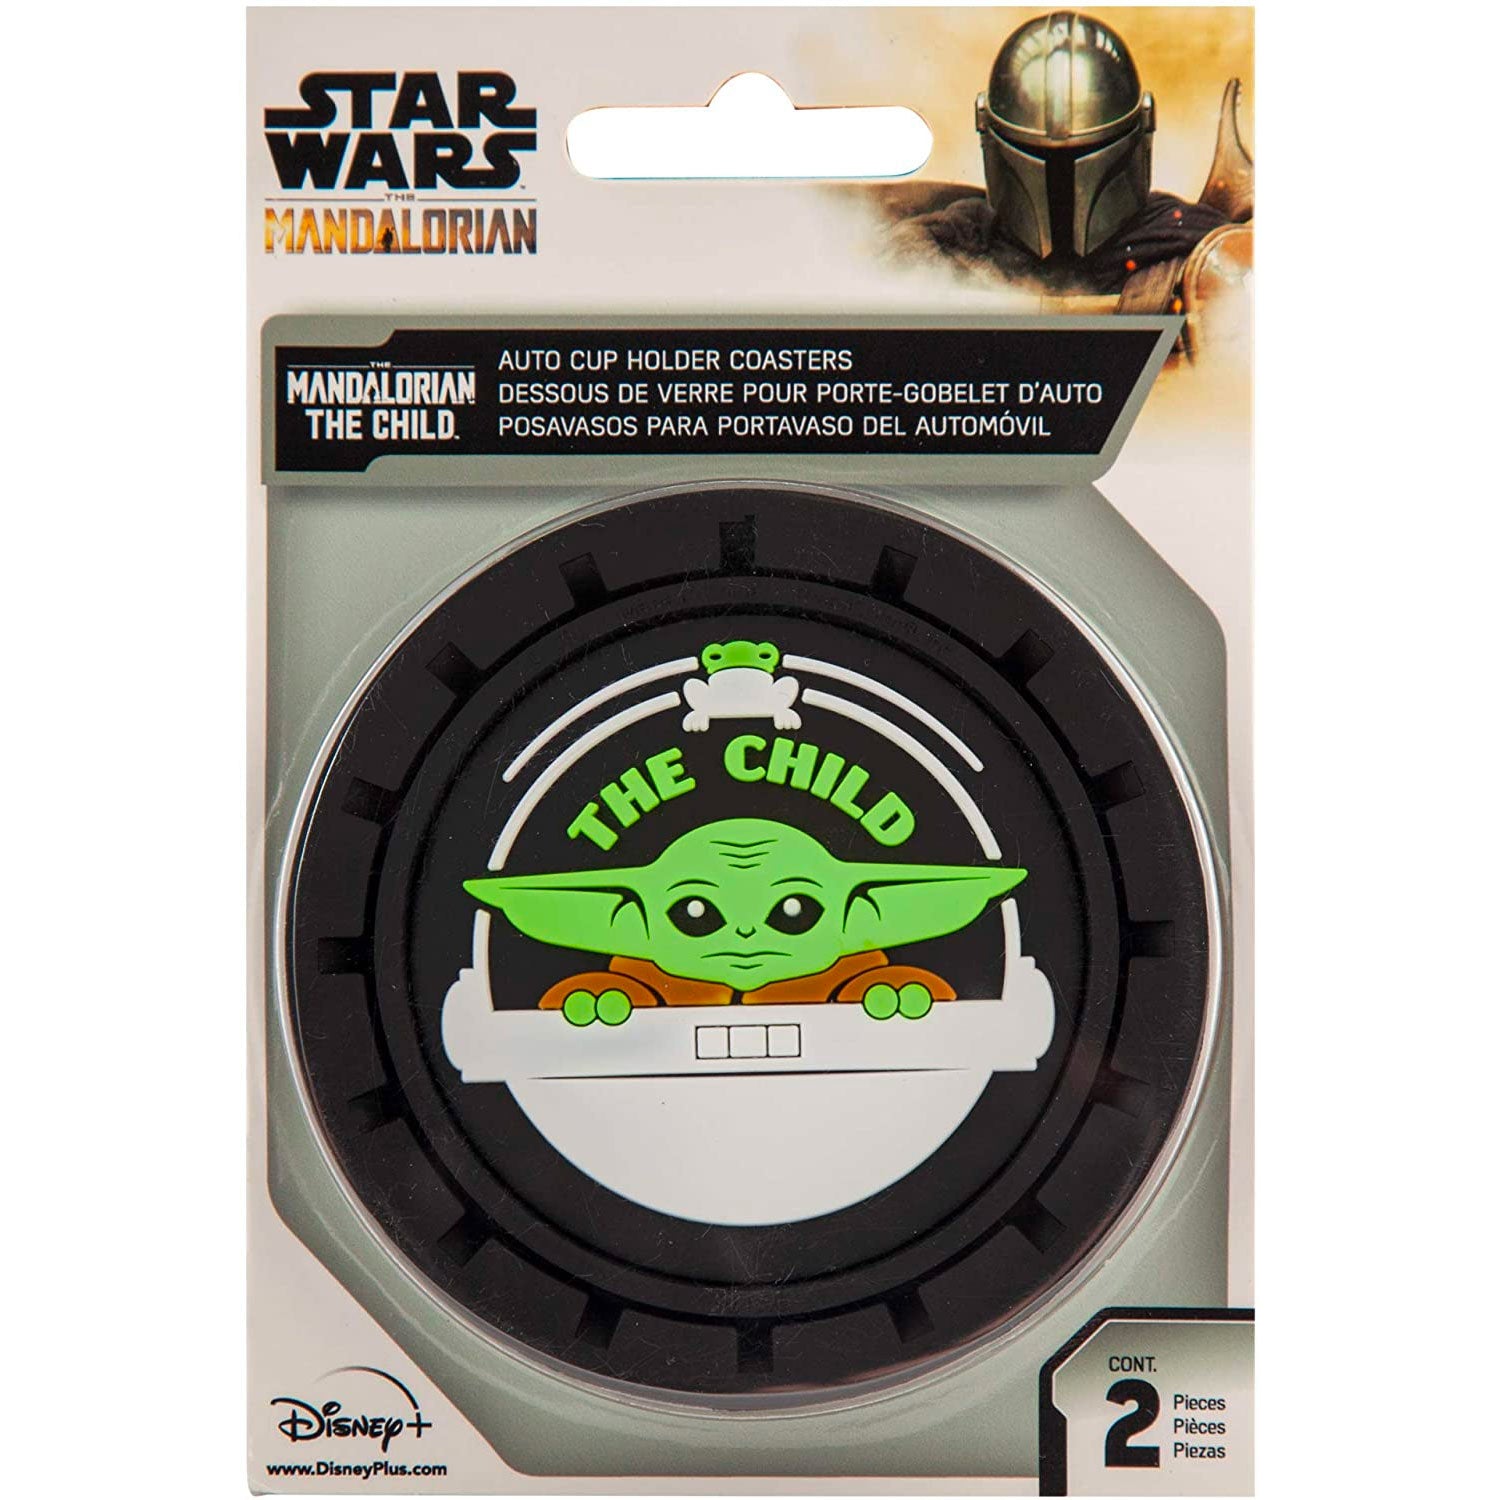  Disney Star Wars The Mandalorian Measuring Cups